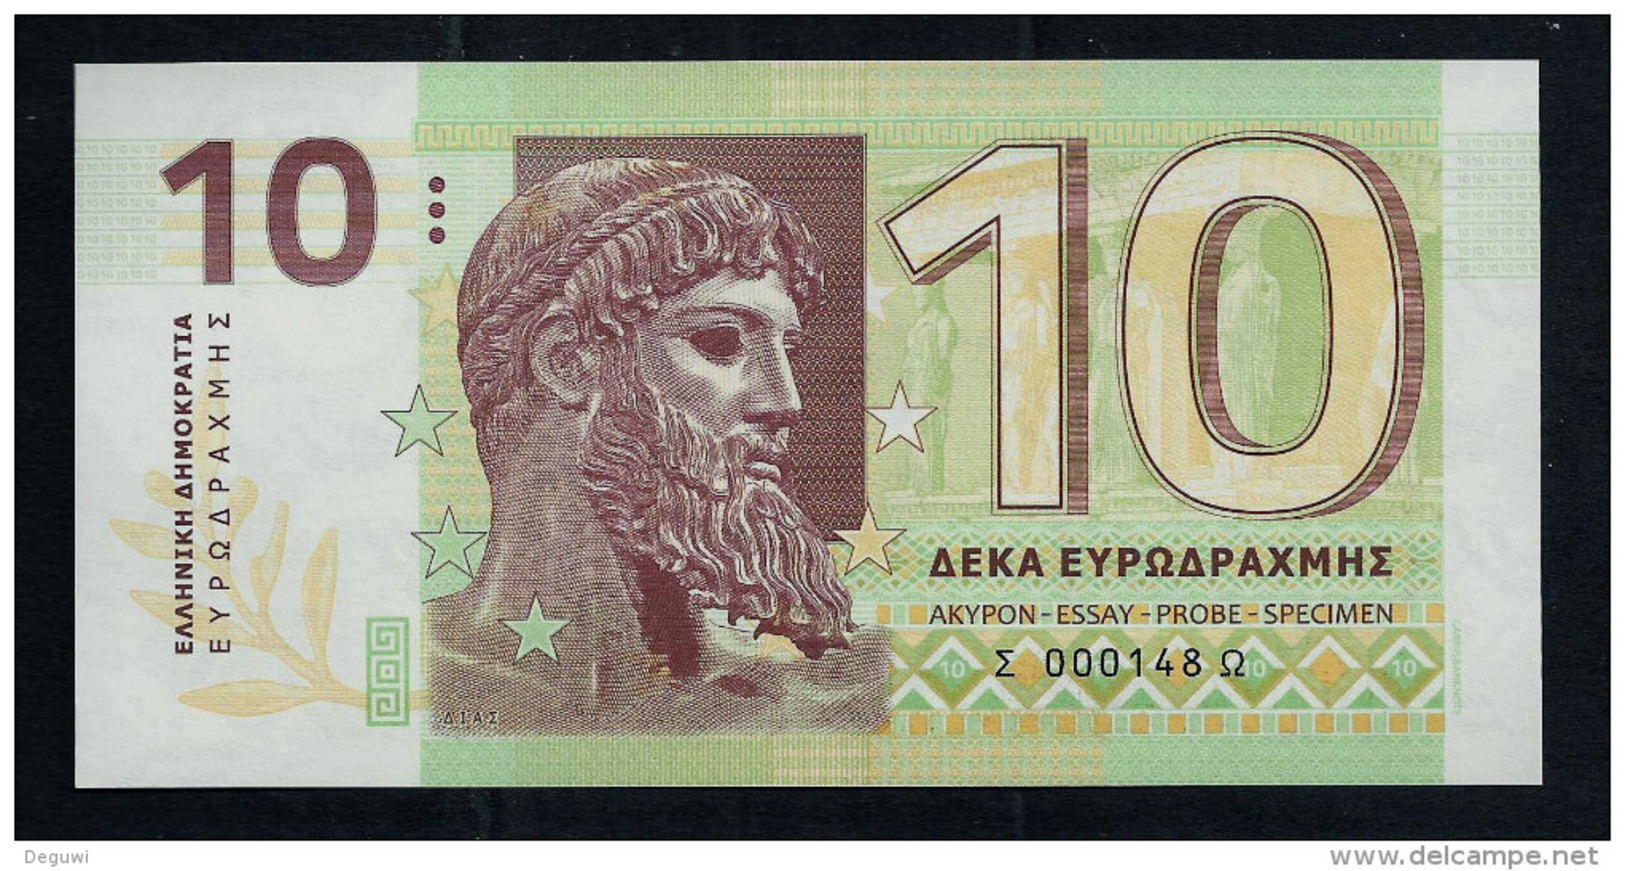 "10 EURO-DRACHME Greece", GABRIS, RRRR, UNC, Ca. 140 X 69 Mm, Essay, Trial, UV, Wm, Serial No., Holo, Private Issue - Grecia